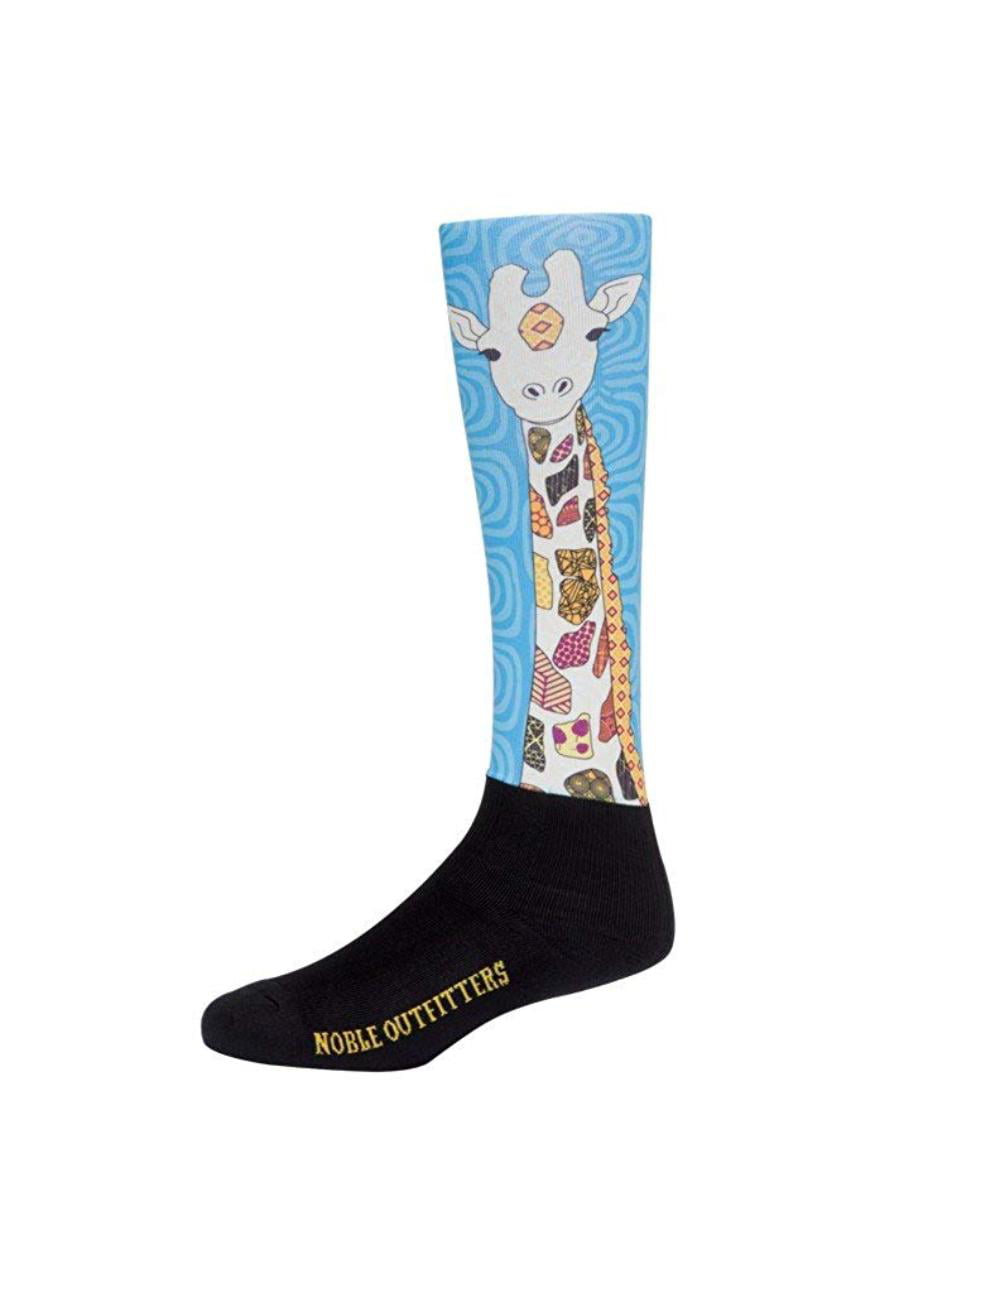 Noble Outfitters Peddies Socks Over the Calf Giraffe Print Women's 